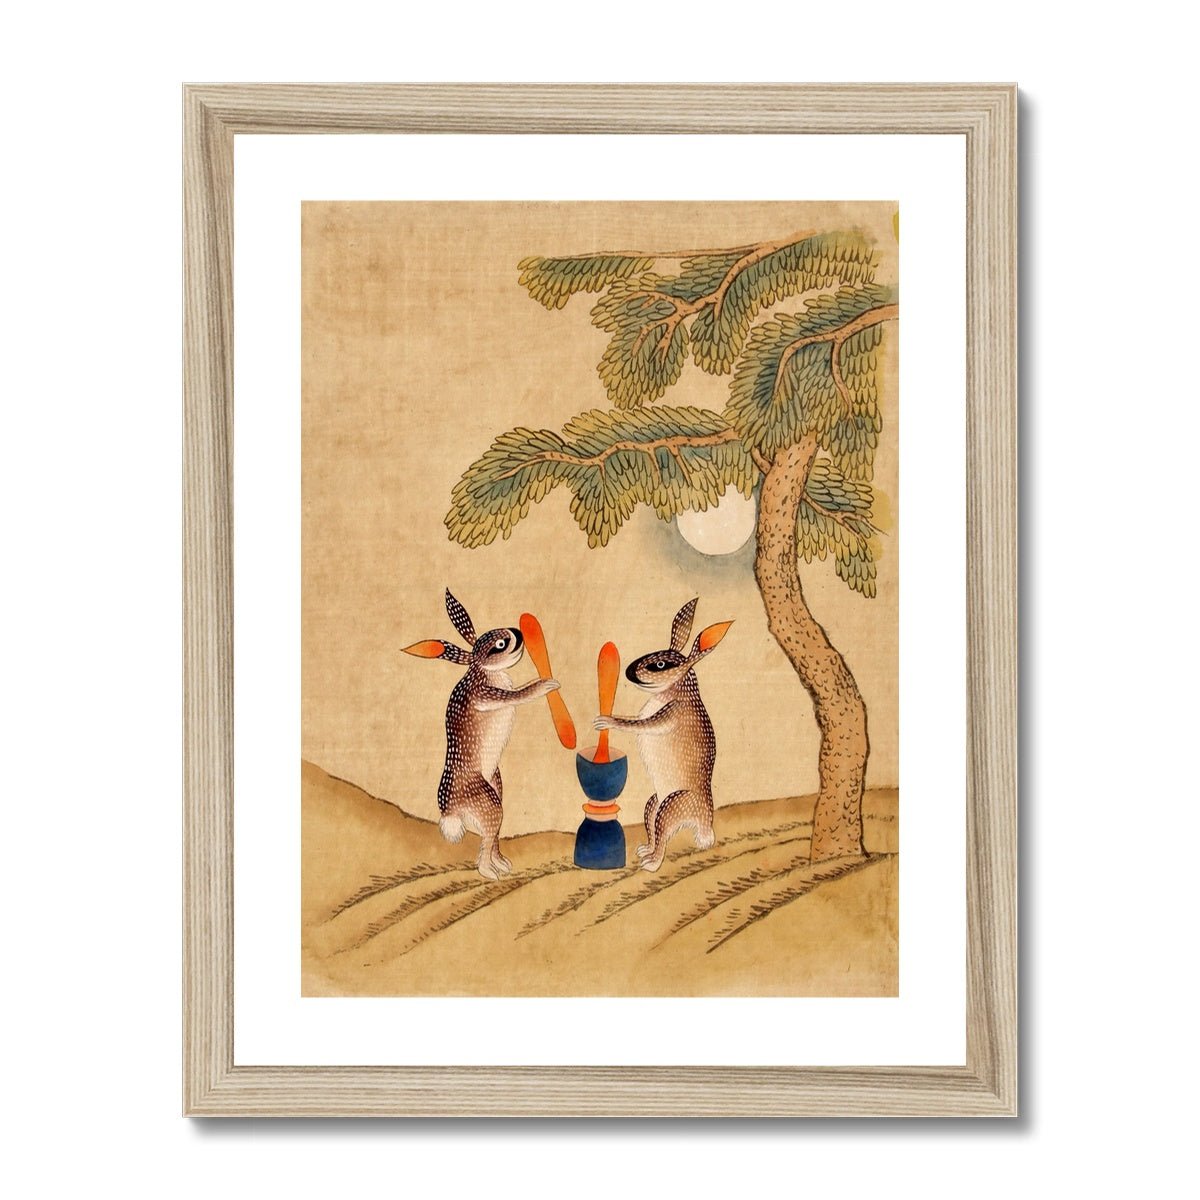 Fine art 11"x14" / Natural Frame Minhwa Bunny of Immortality, Staring at the Moon | Classic Korean Mythology Folk Art | Cute Kawaii Rabbit Pet Lover Framed Art Print